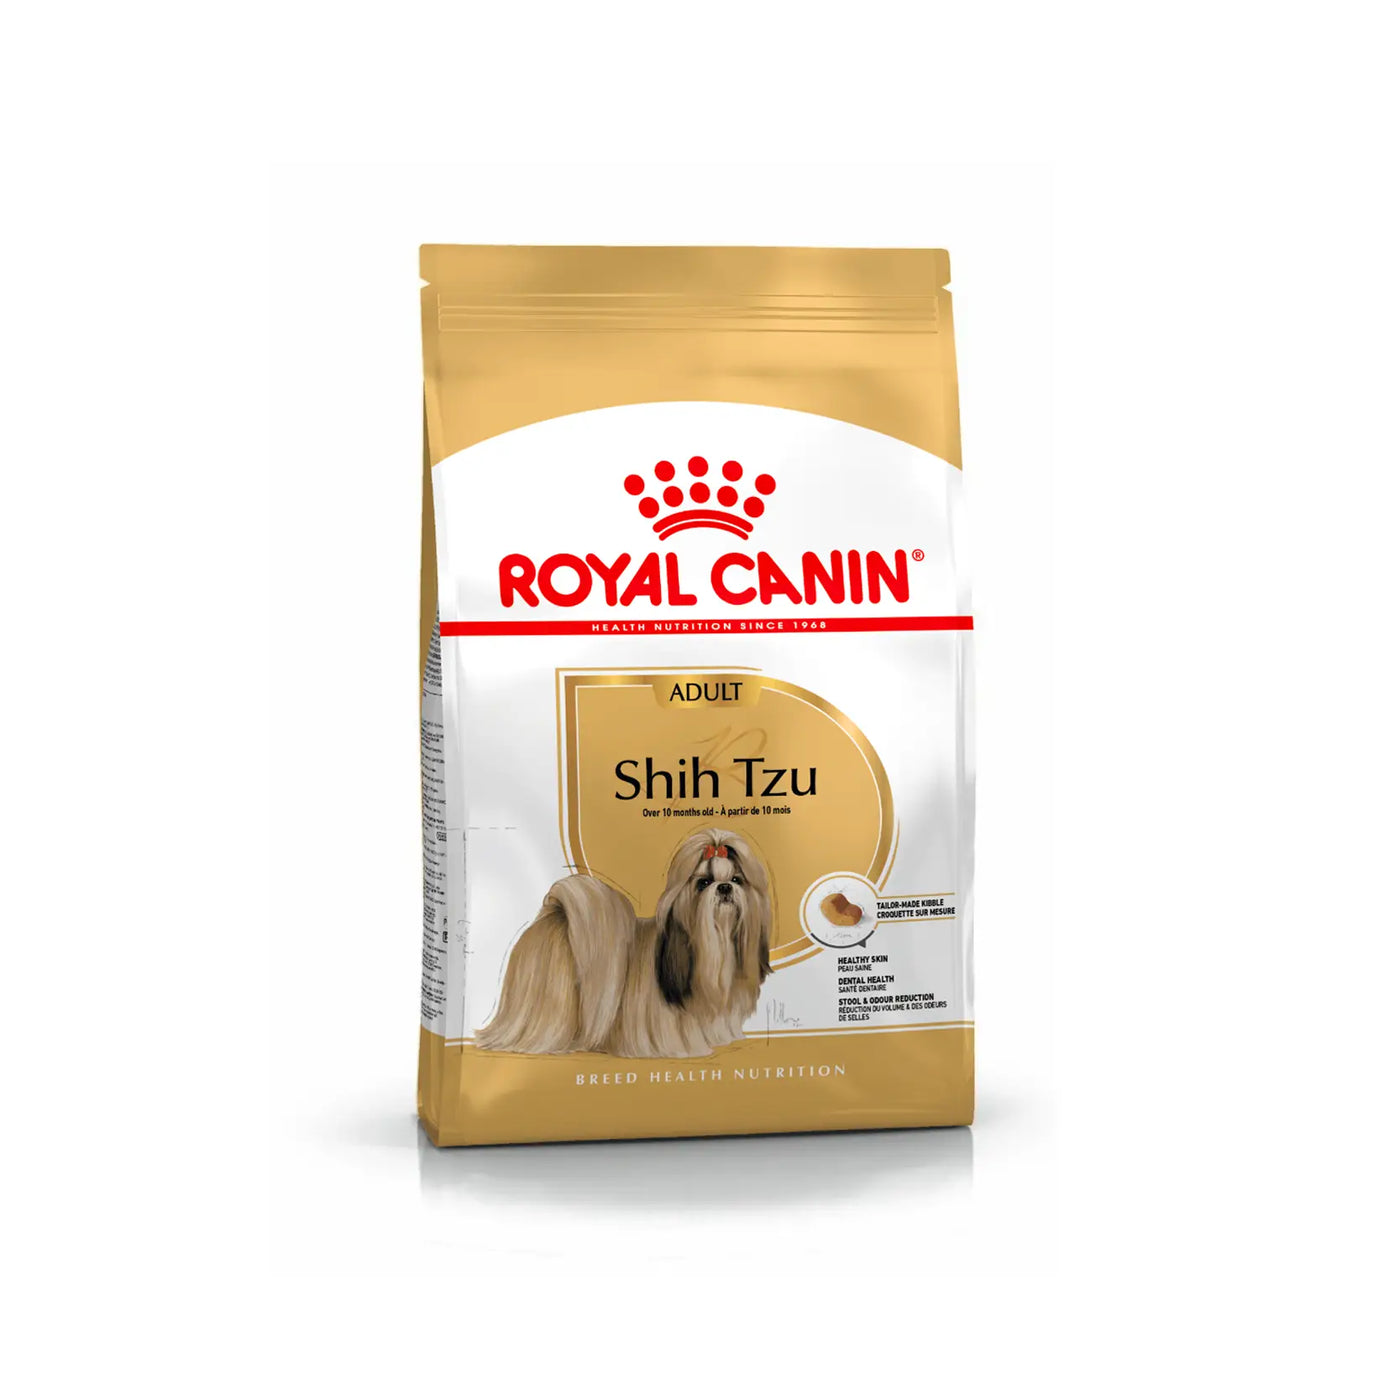 Royal Canin - Shih Tzu Adult Dry Food 1.5kg